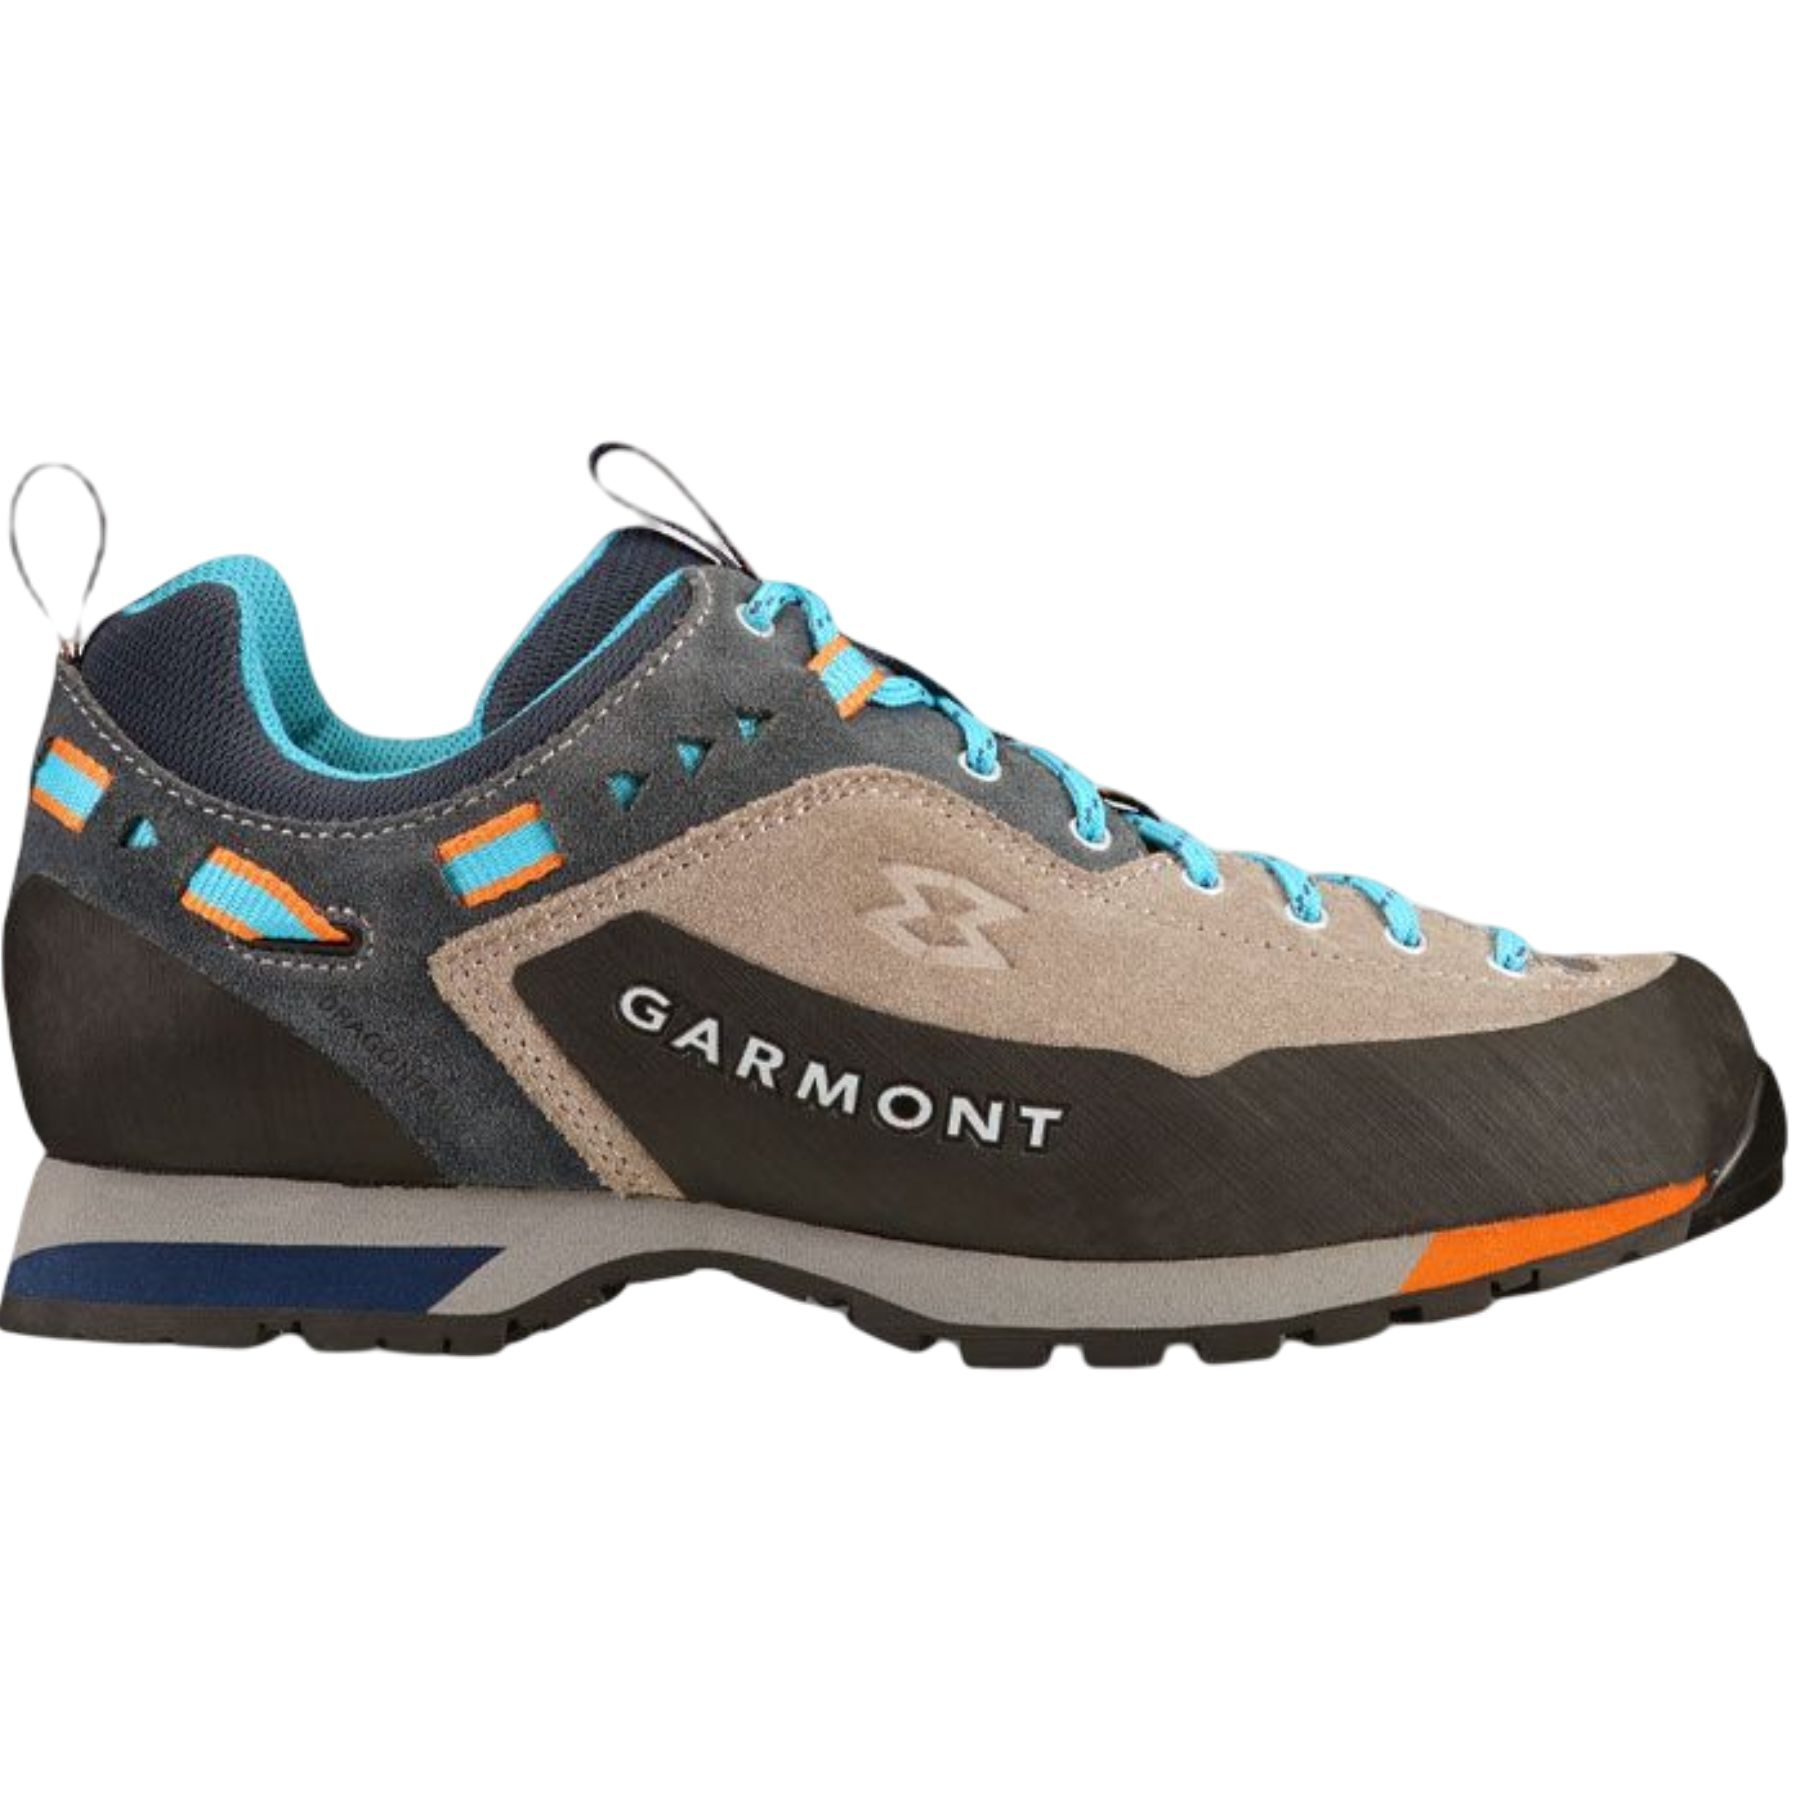 Garmont - Dragontail LT Wms - Approach shoes - Women's